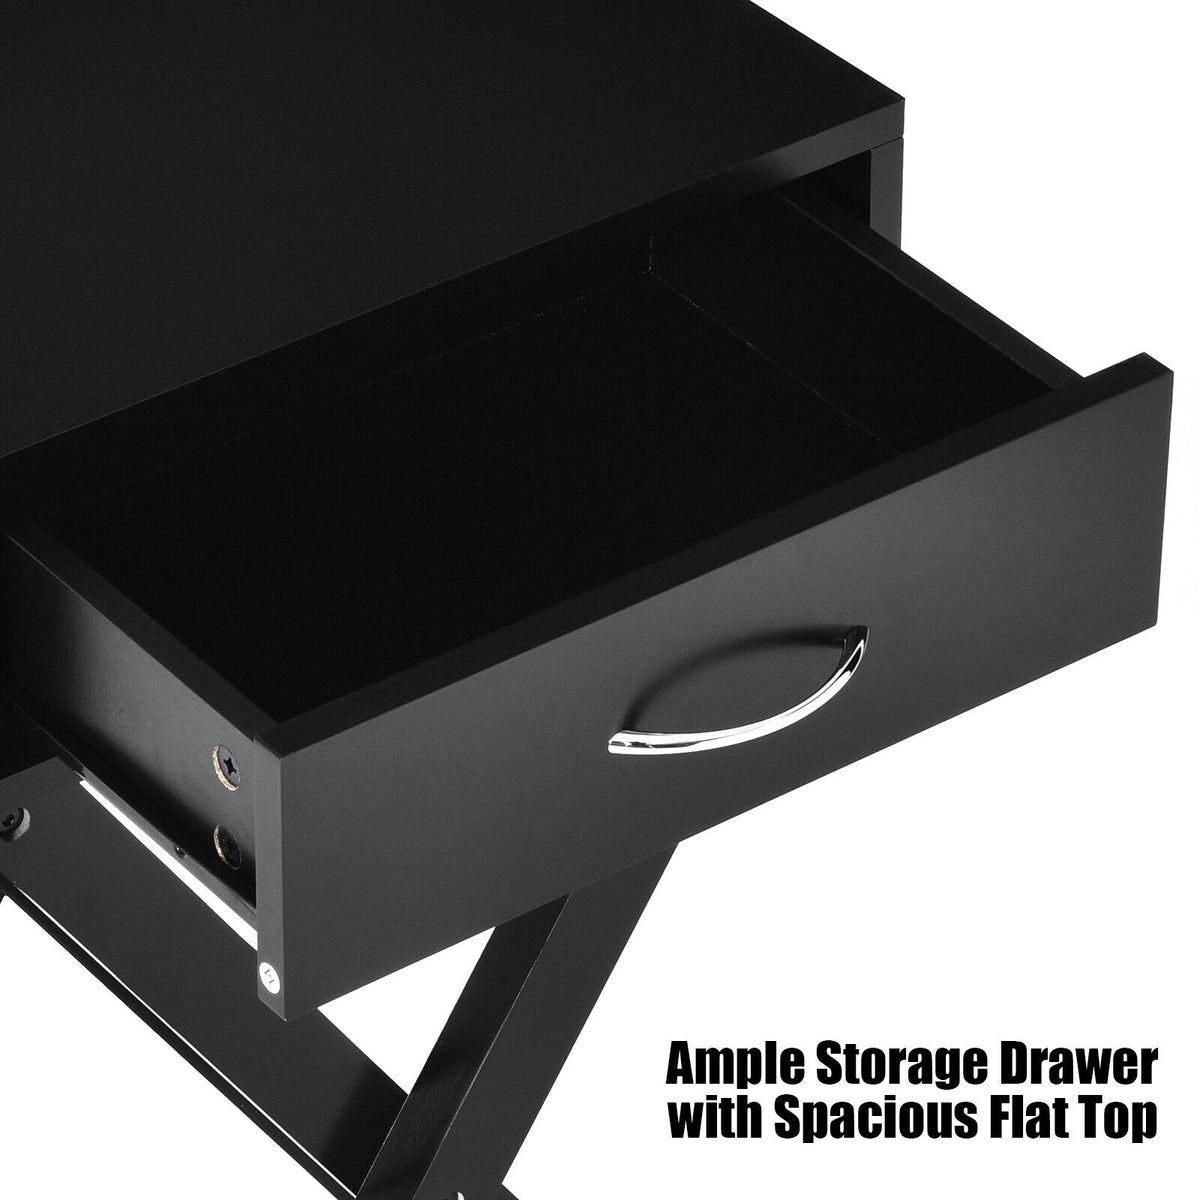 Black X-Shape Drawer Nightstand Home Furniture